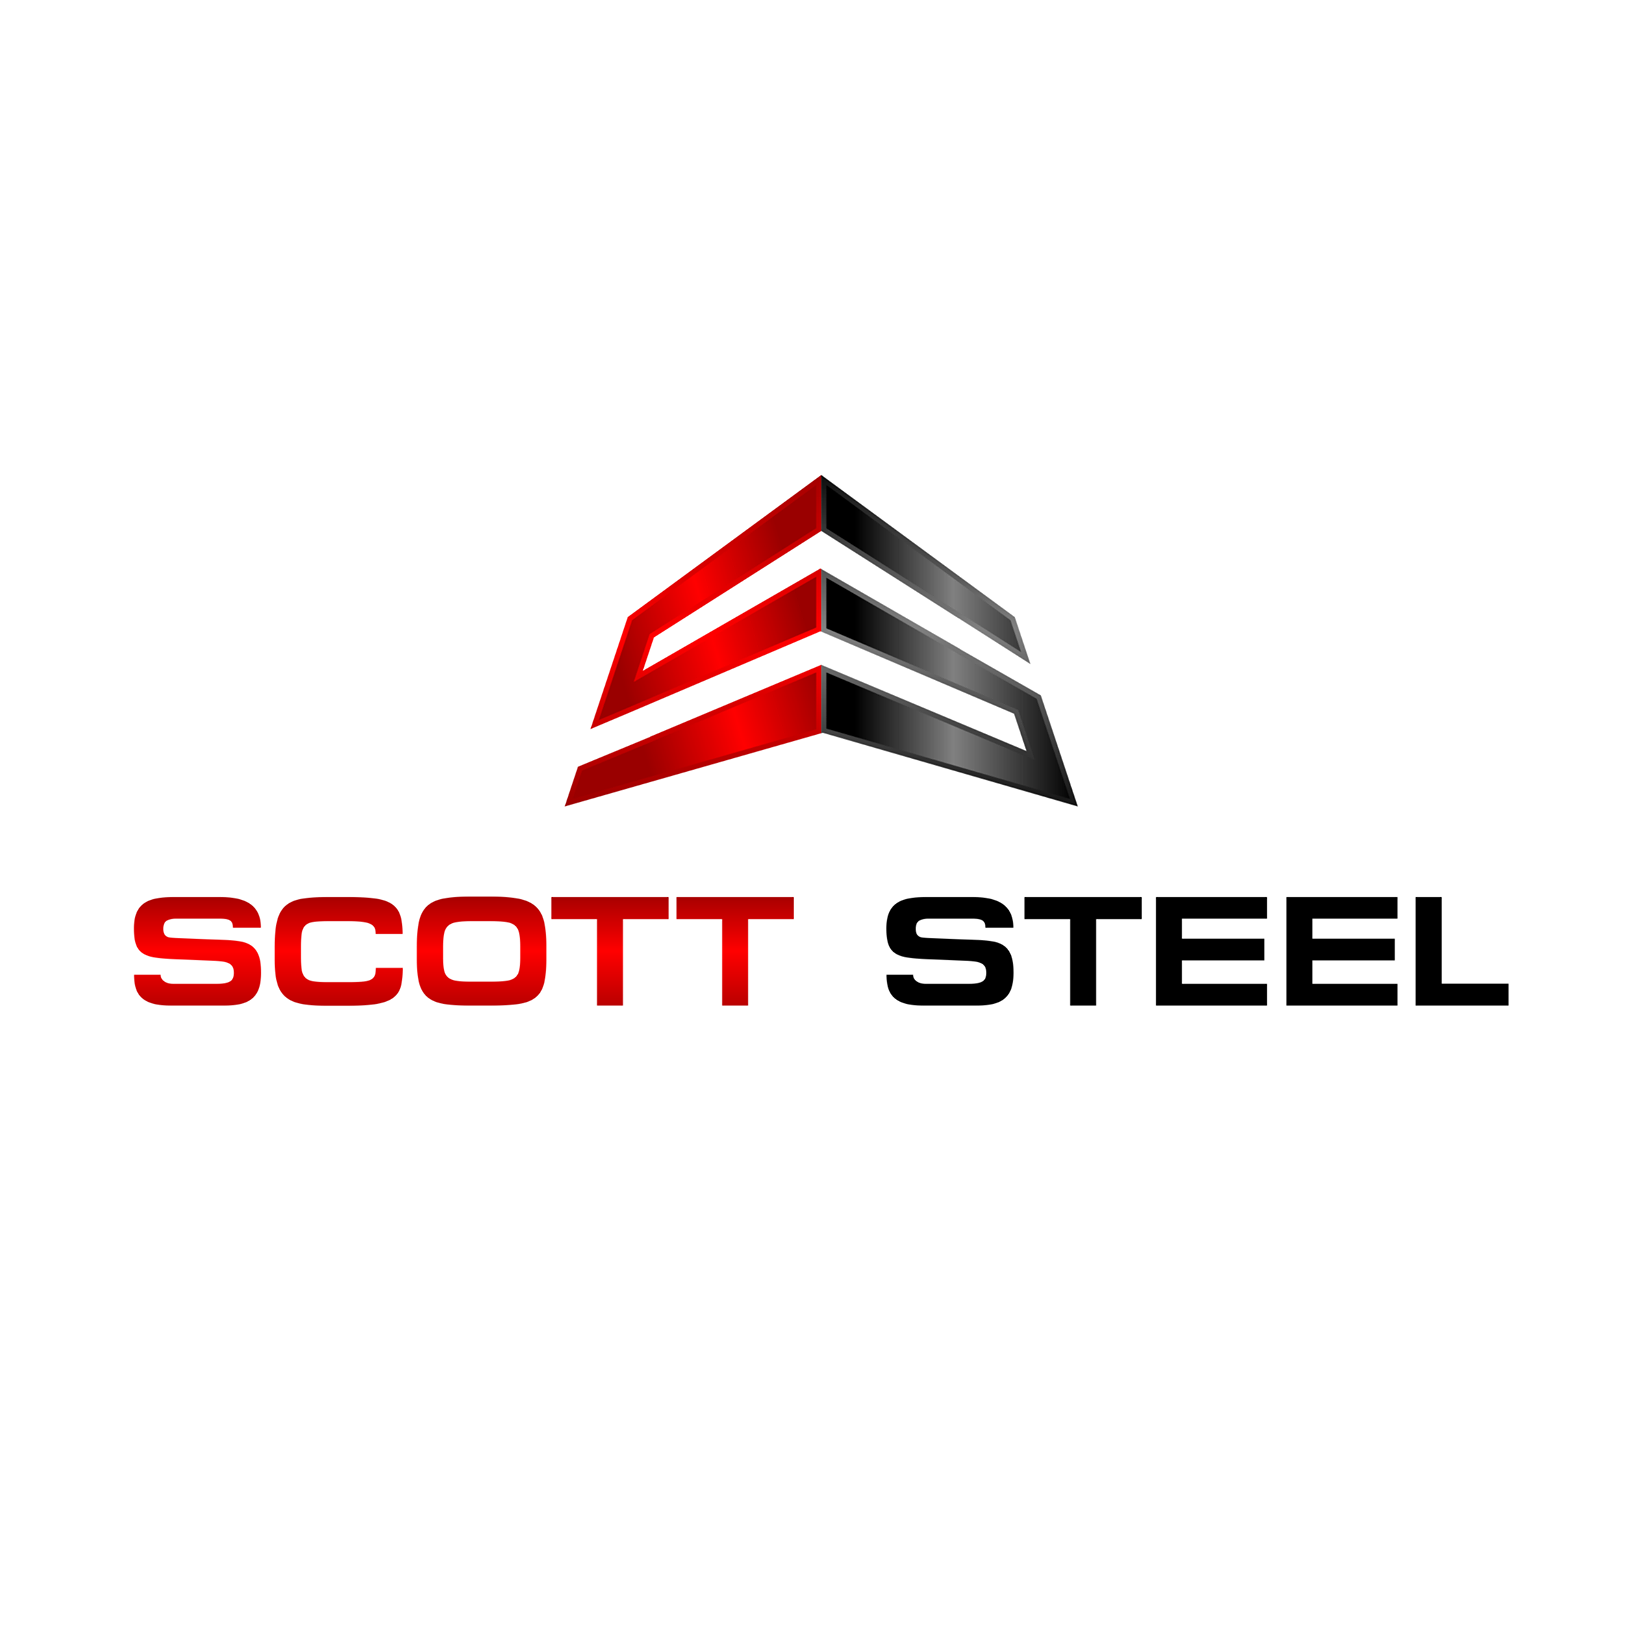 Scott Steel Erectors Inc logo